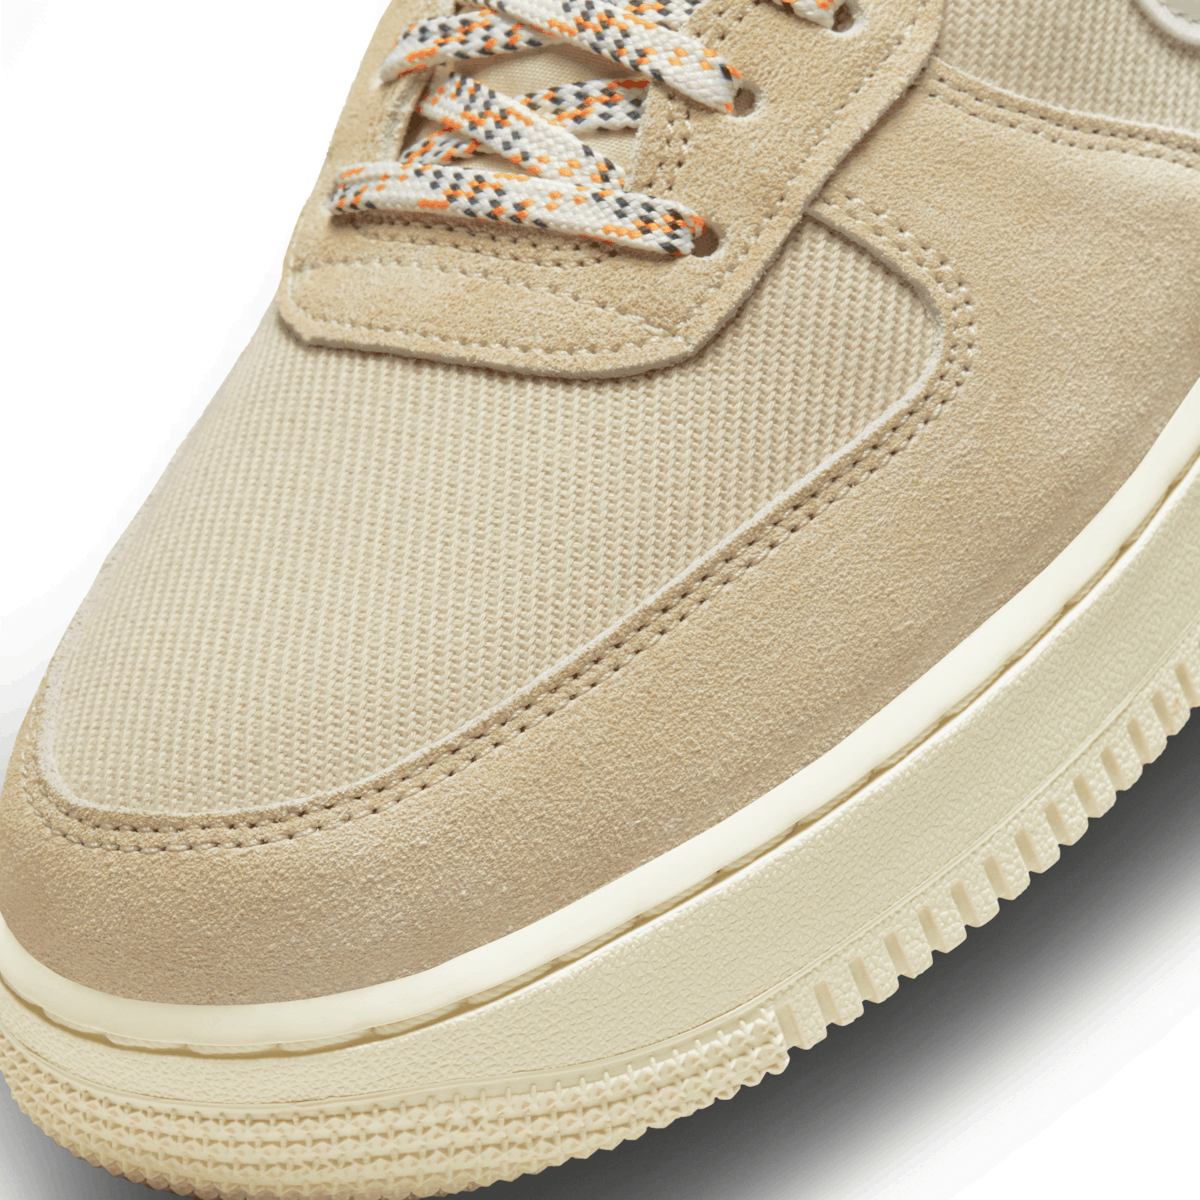 Nike Air Force 1 Low `07 LV8 Certified Fresh Rattan Sneaker Shoe